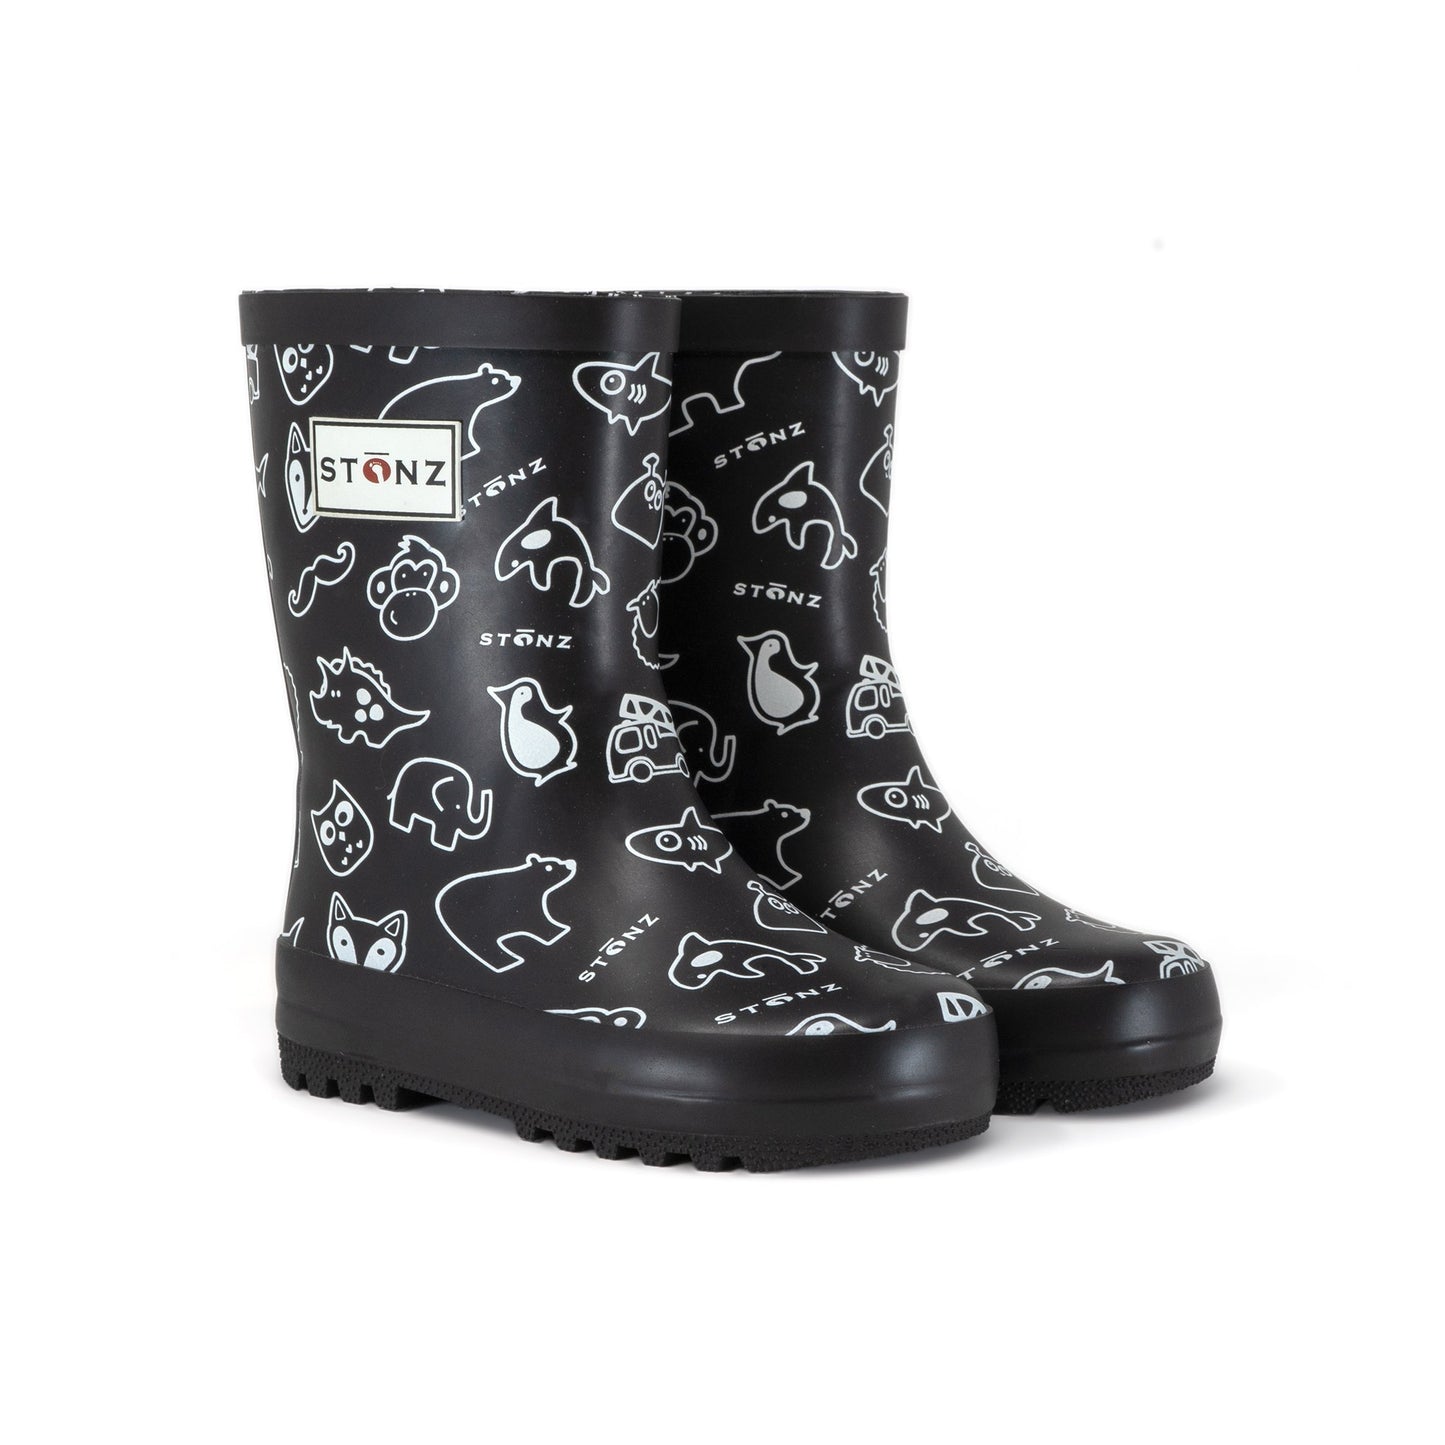 Kid's Stonz rubber Rain Boots in Black animal print